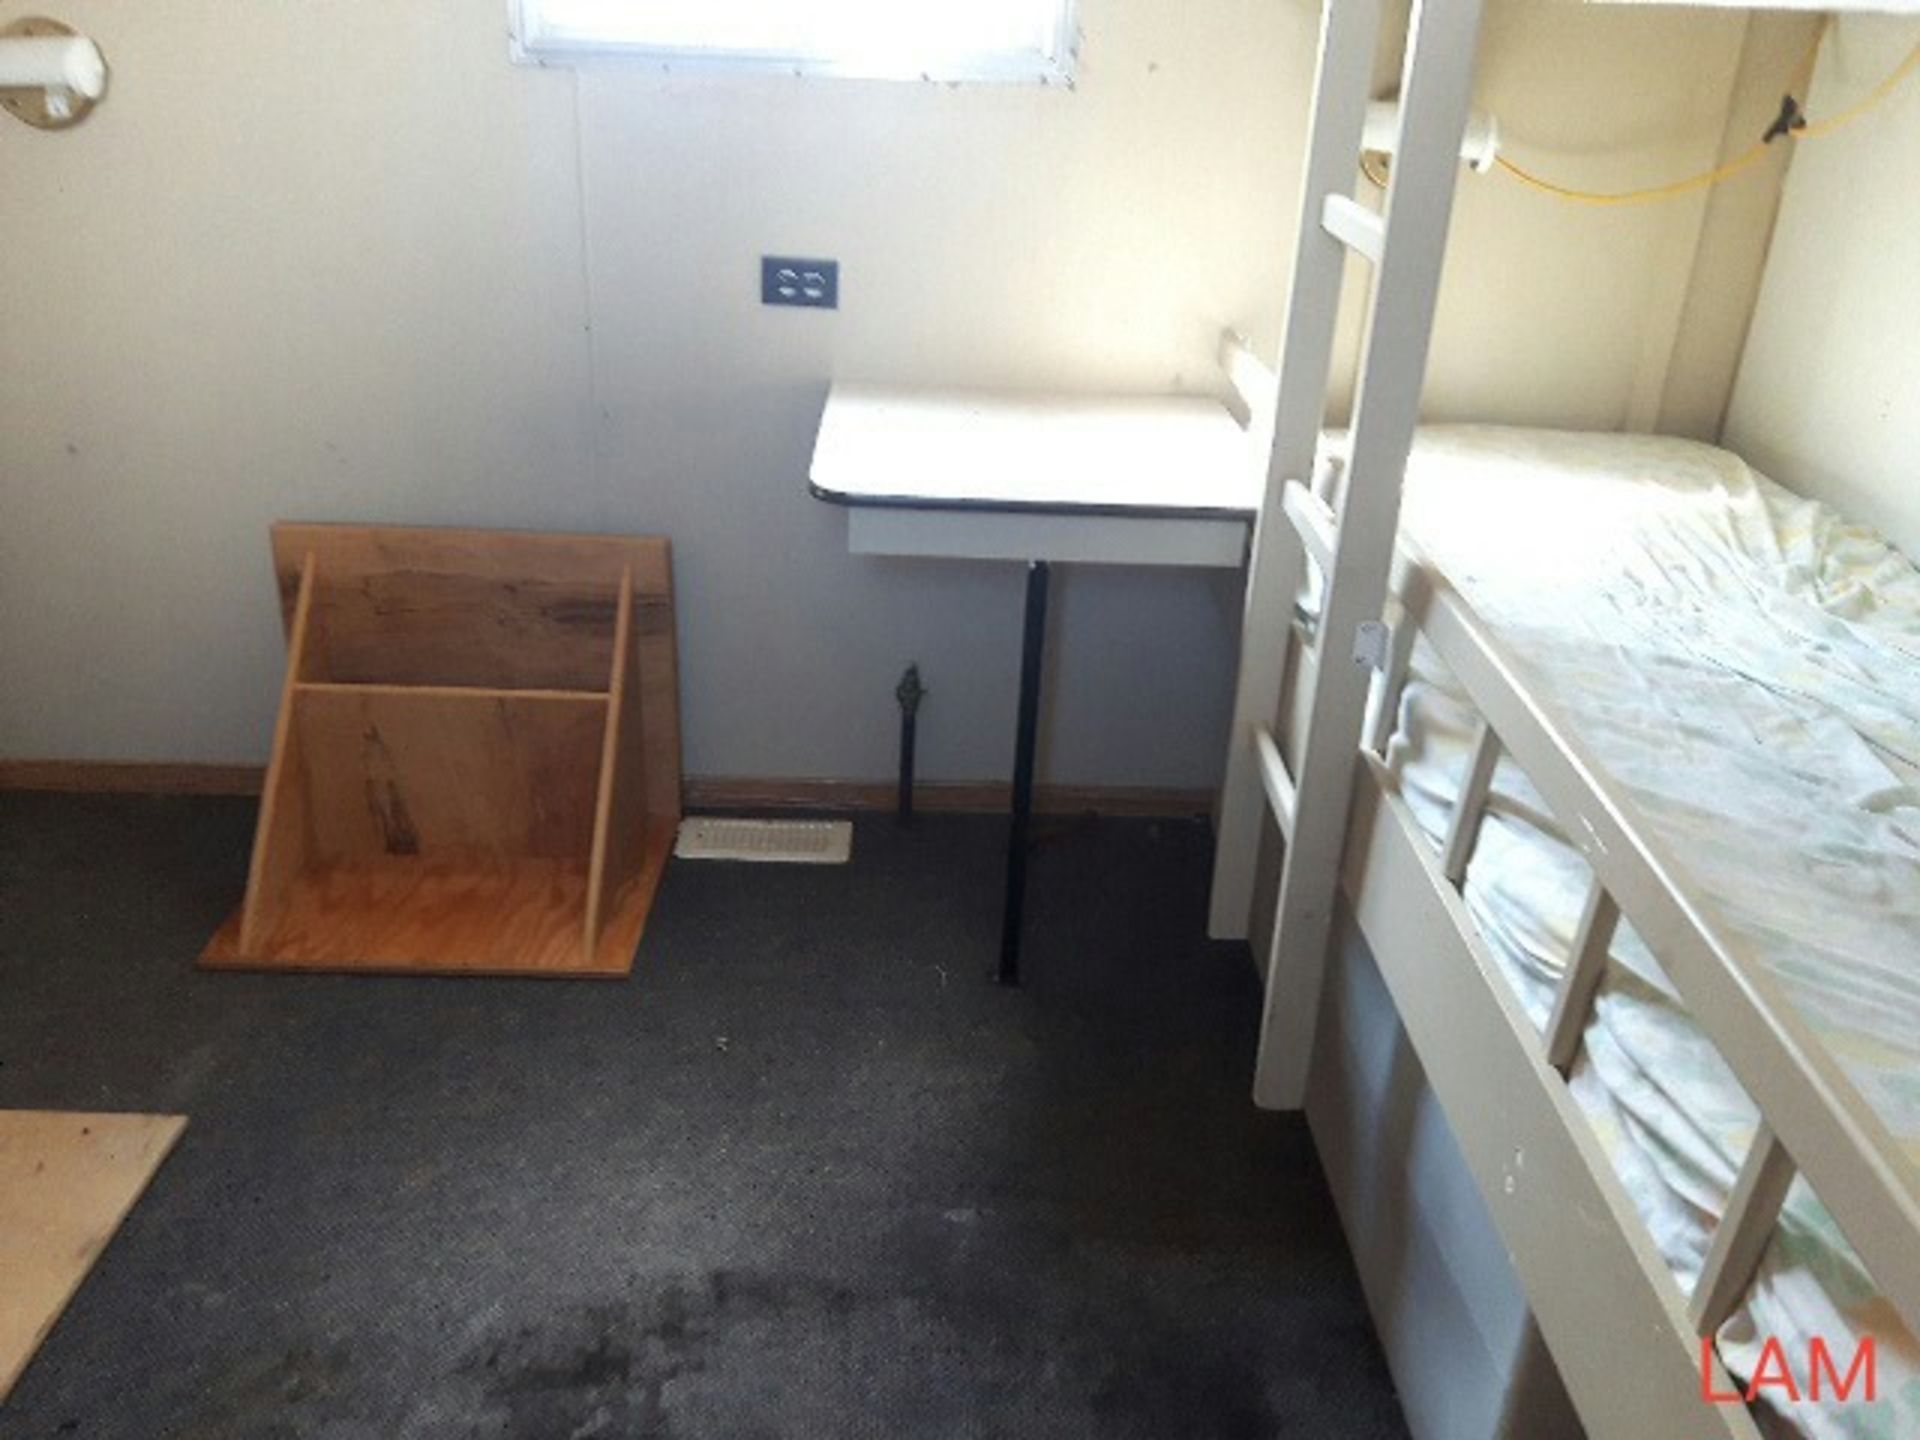 10 x 40 Wellsite Unit 2-Bedroom, 1-Bath,Electric Hot Water Tank, 2- 500gal. Pigs - Image 9 of 9